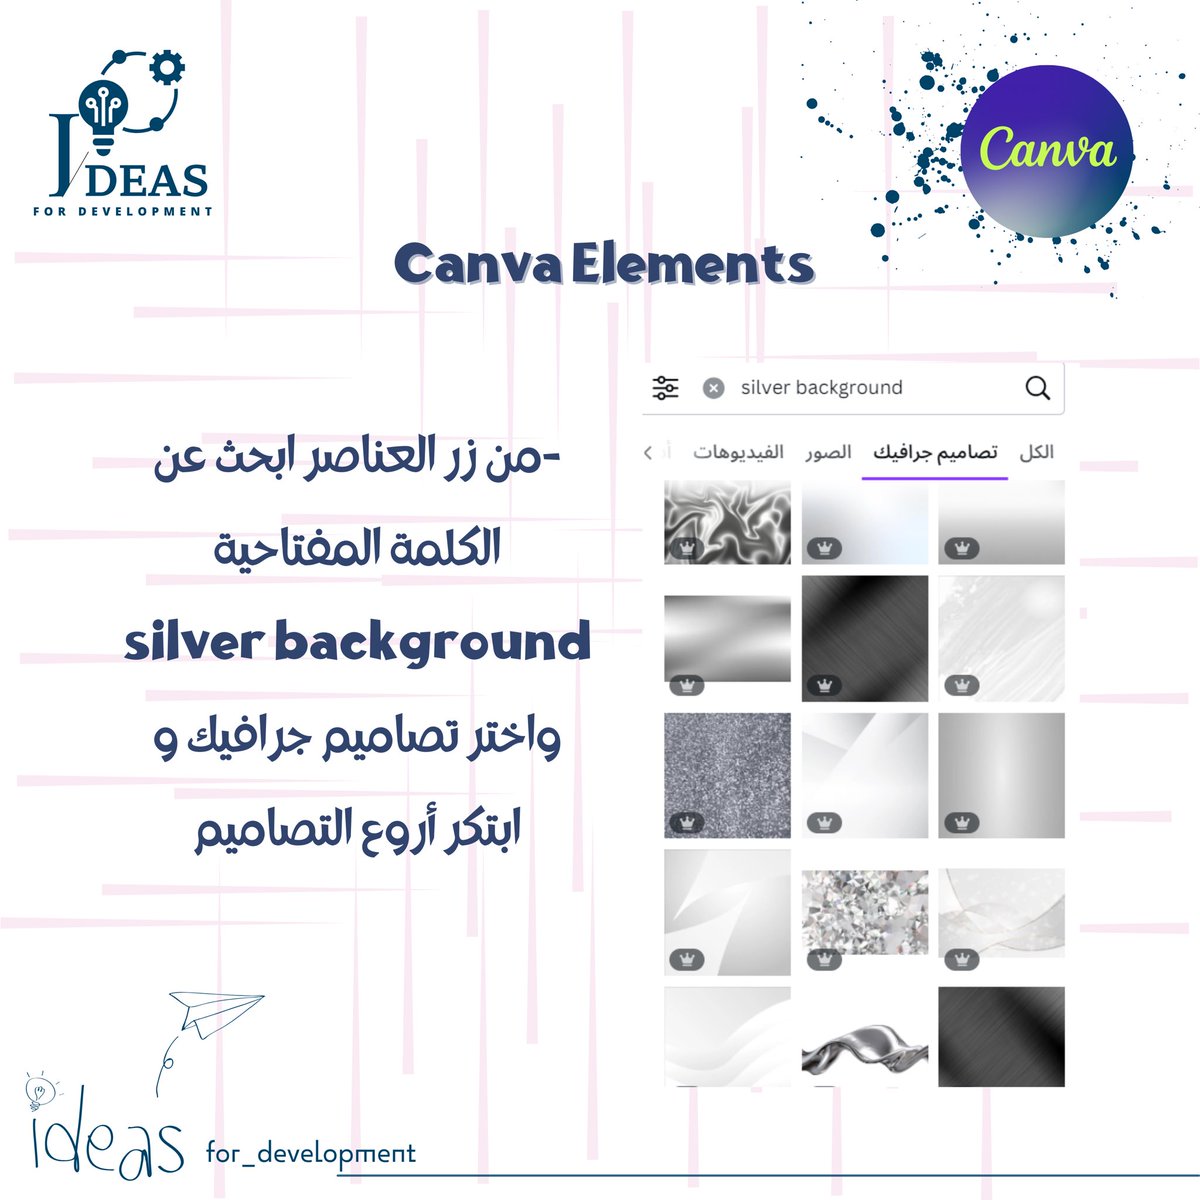 #design #designer #canvapro #canvatips #canvatemplate #canvaelements #infographic #canvadesigner